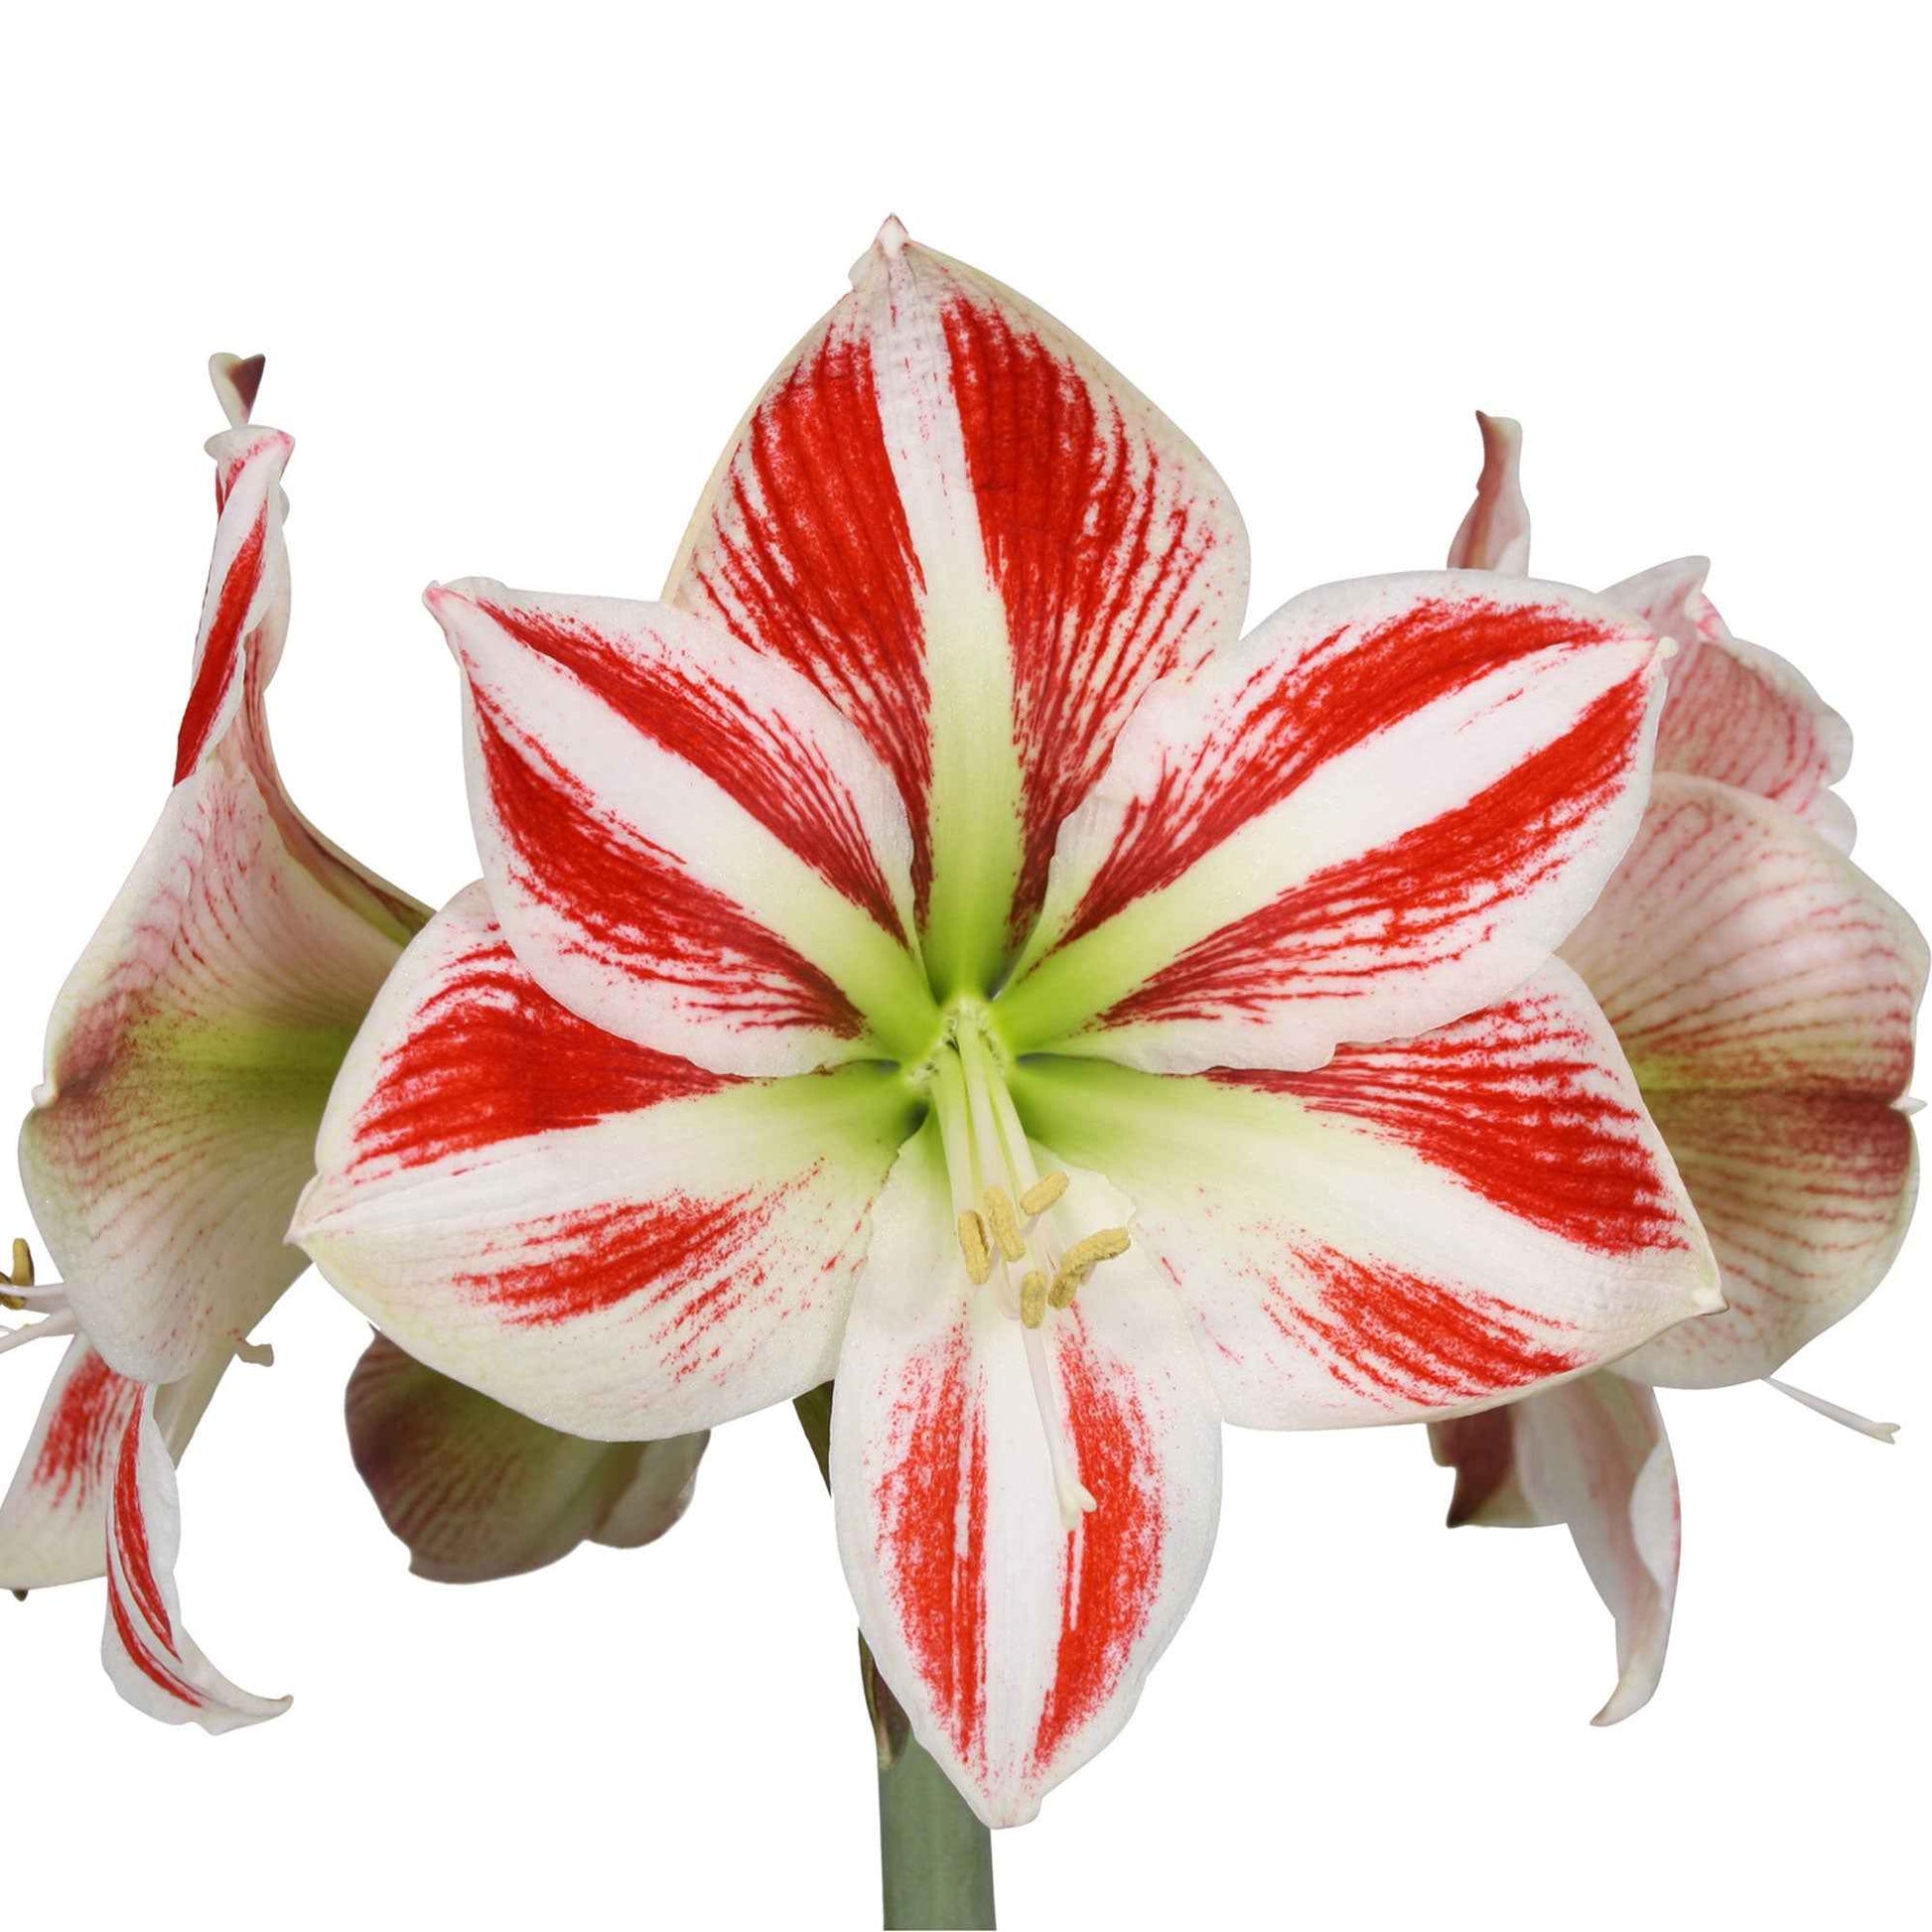 2x Amaryllis Hippeastrum 'Striped' rood-wit incl. sierpotten - Alle populaire bloembollen